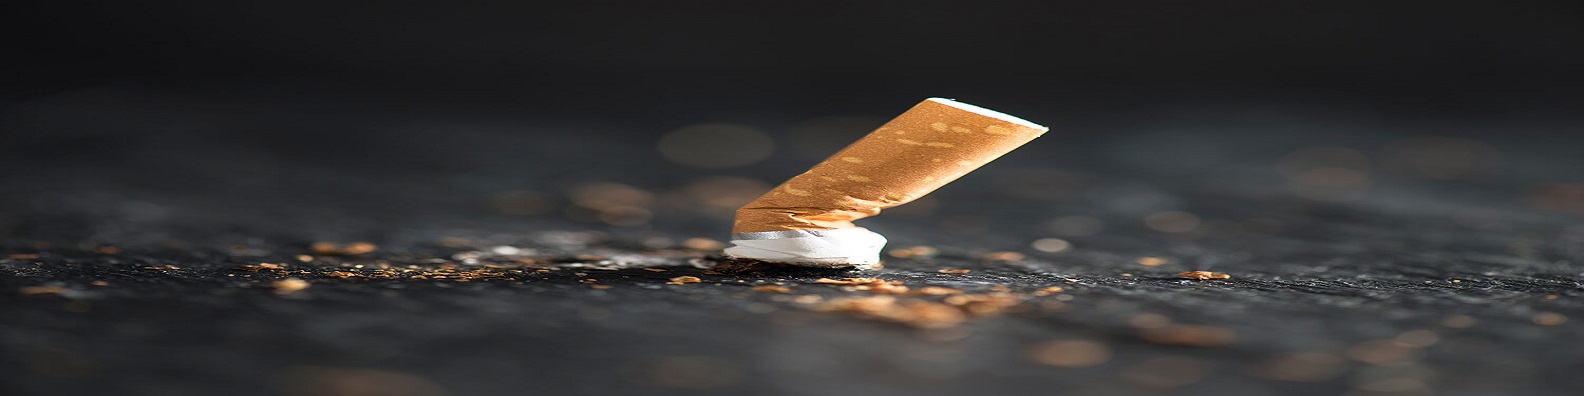 Philip Morris kæmper for et røgfrit Danmark